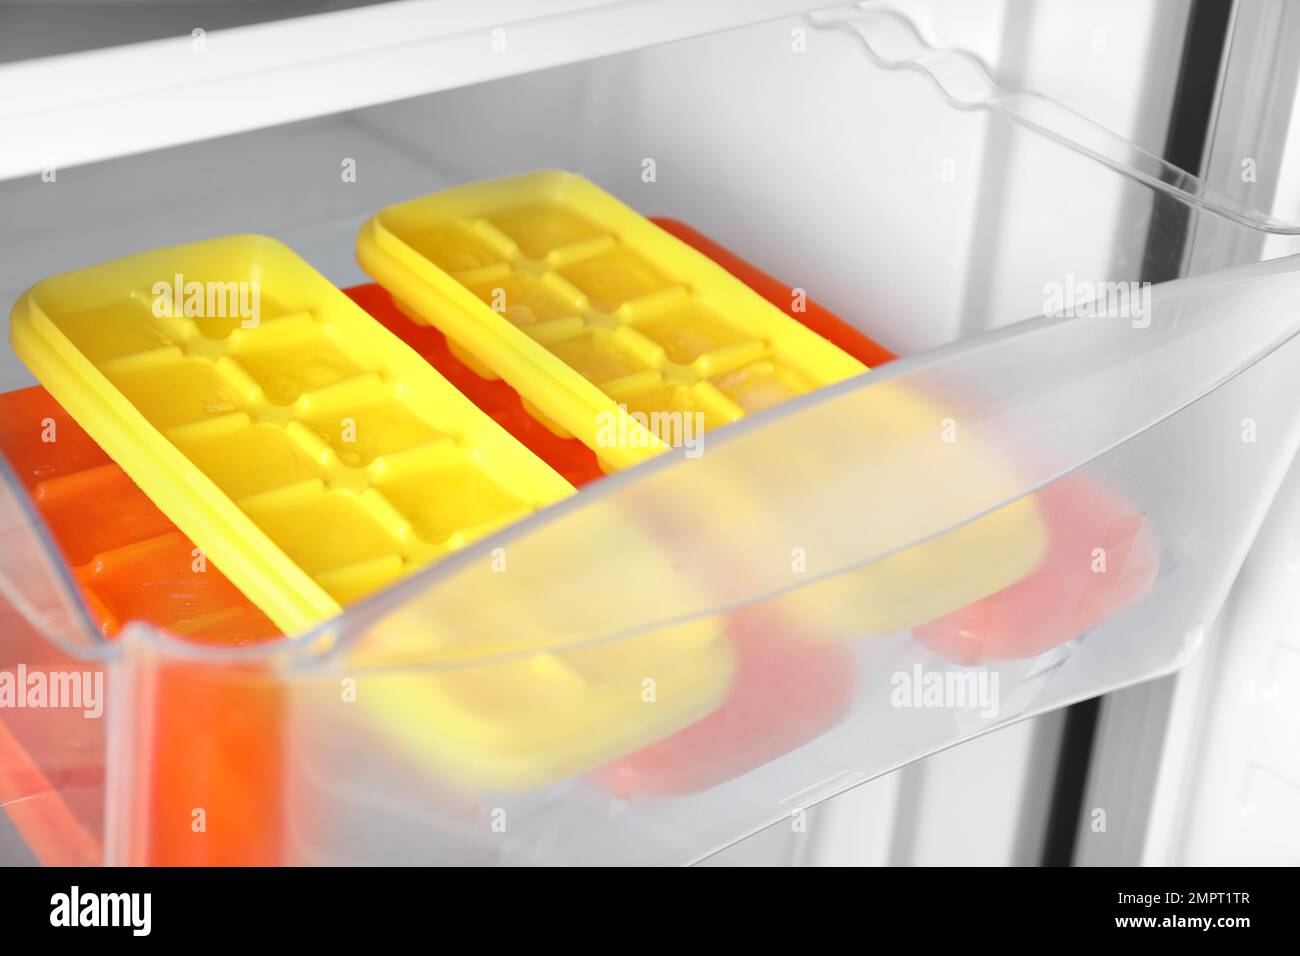 https://c8.alamy.com/comp/2MPT1TR/different-plastic-ice-cube-trays-in-fridge-2MPT1TR.jpg